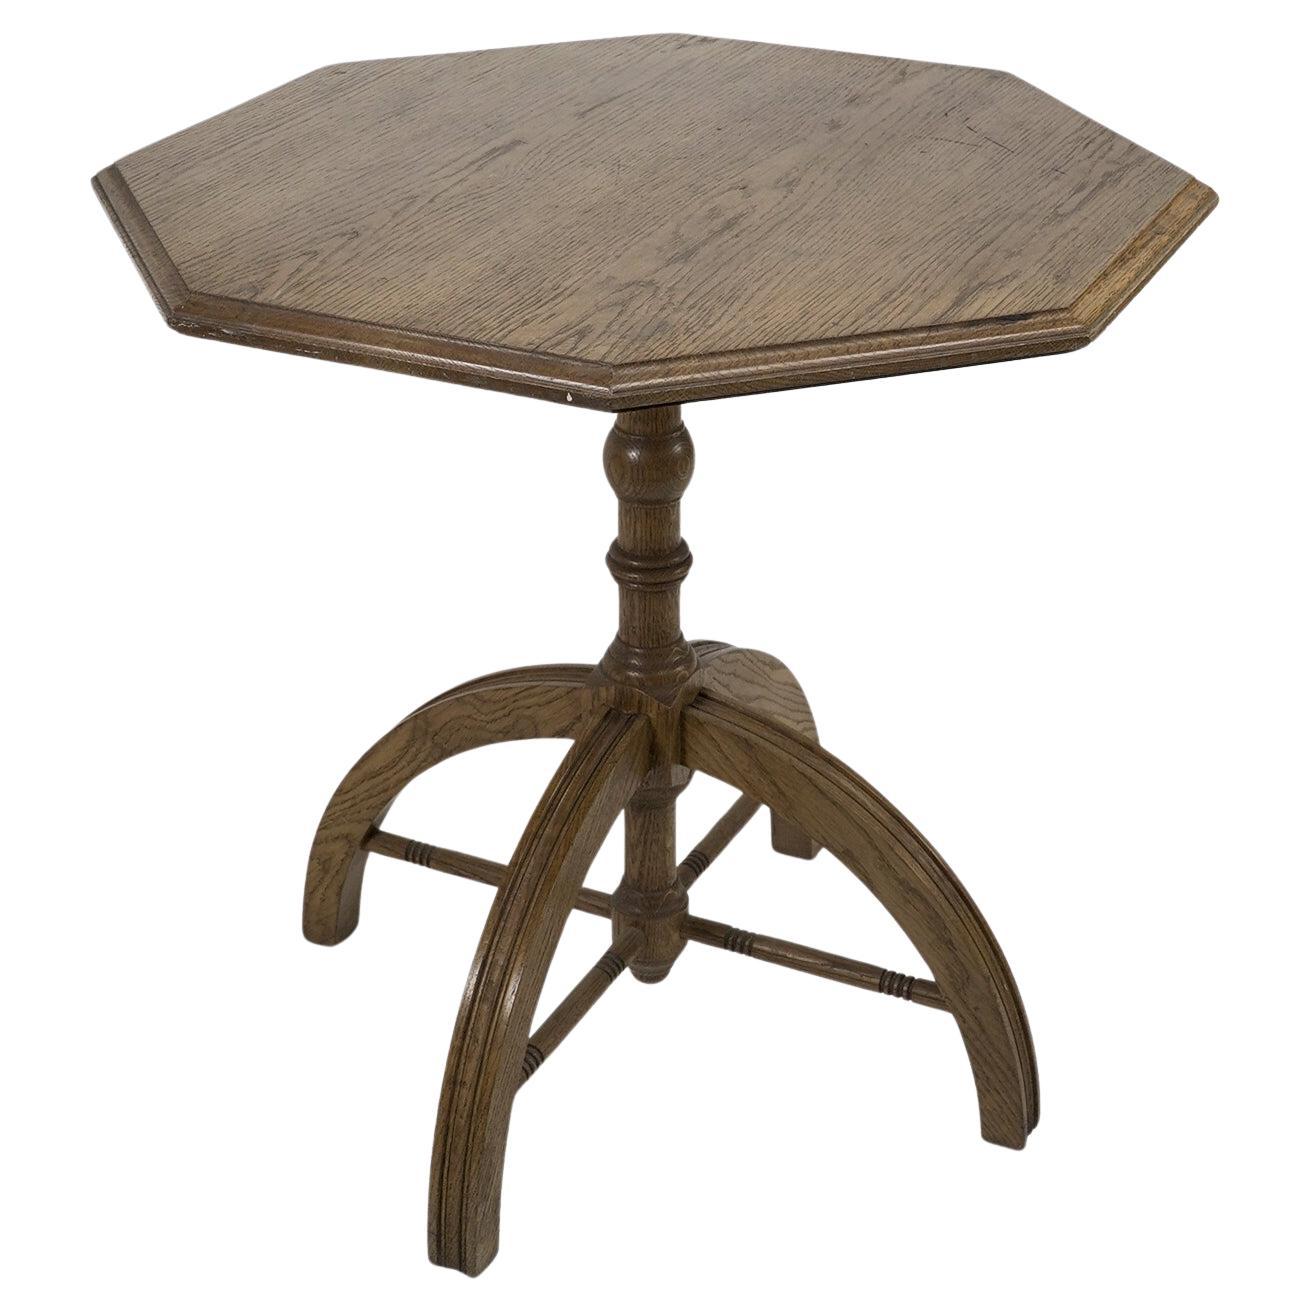 A W N Pugin. A modern craftsman made Gothic Revival oak octagonal centre table